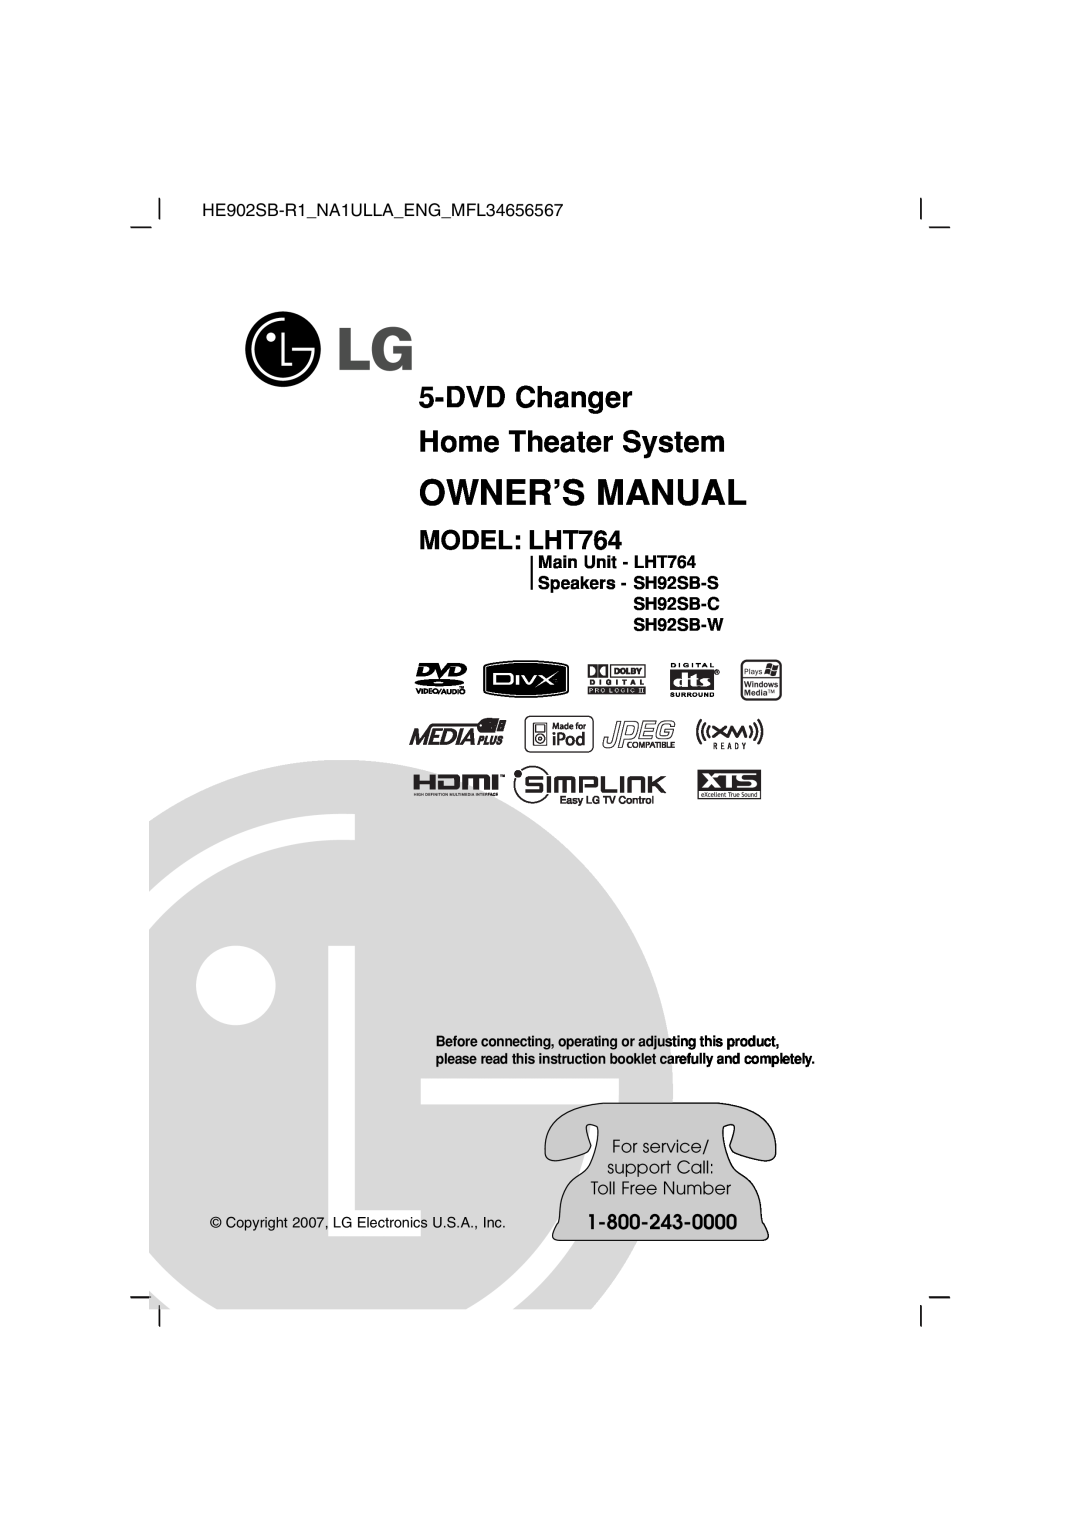 LG Electronics owner manual DVDChanger Home Theater System, Main Unit - LHT764 Speakers - SH92SB-S SH92SB-C, SH92SB-W 